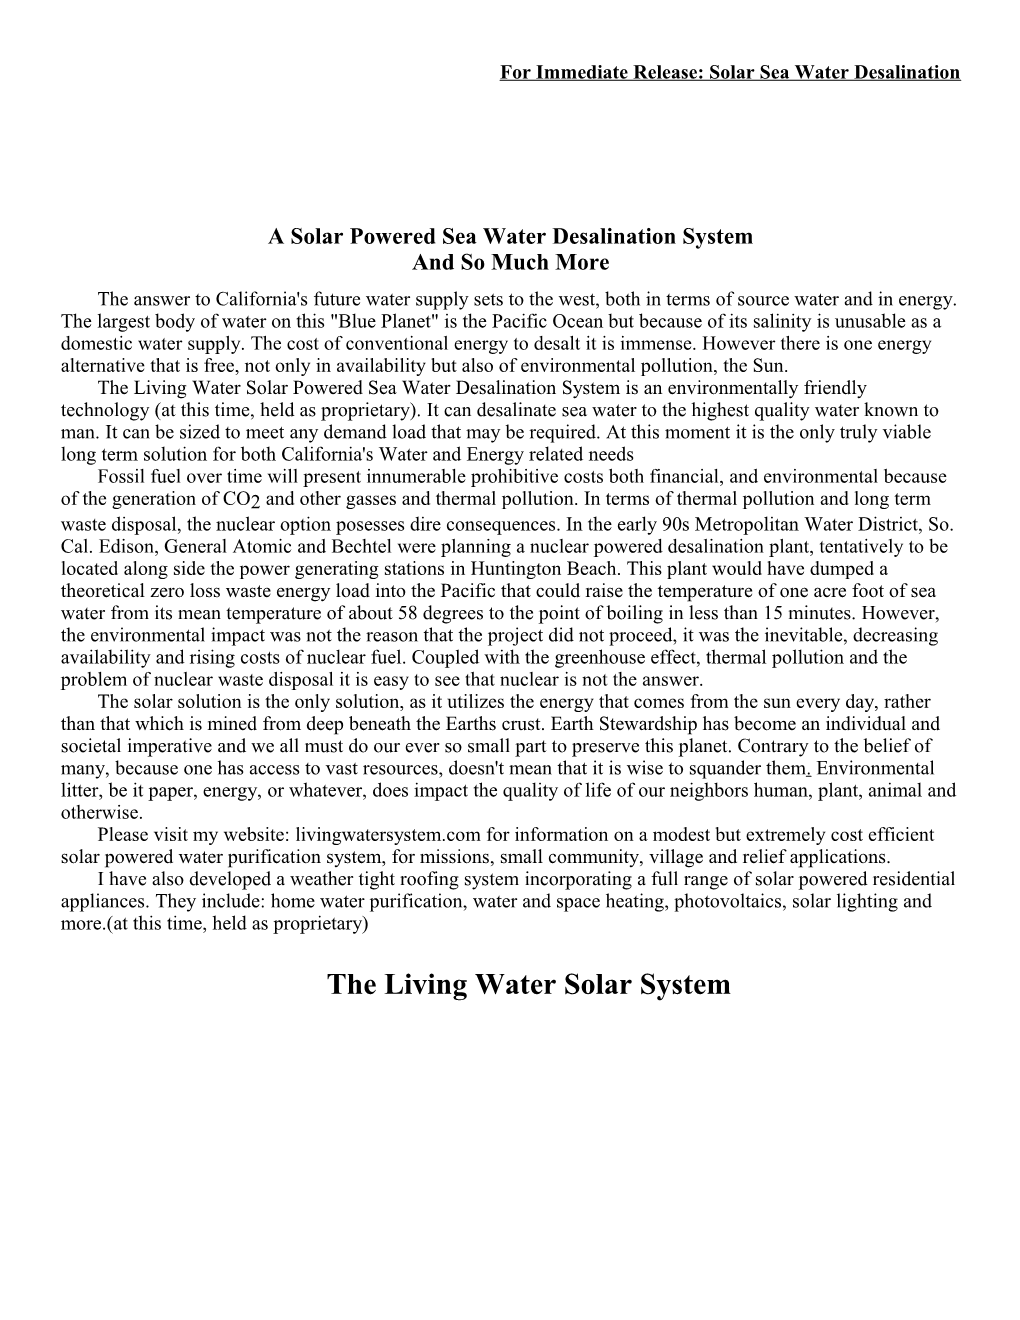 LWSS Sea Water Alternative